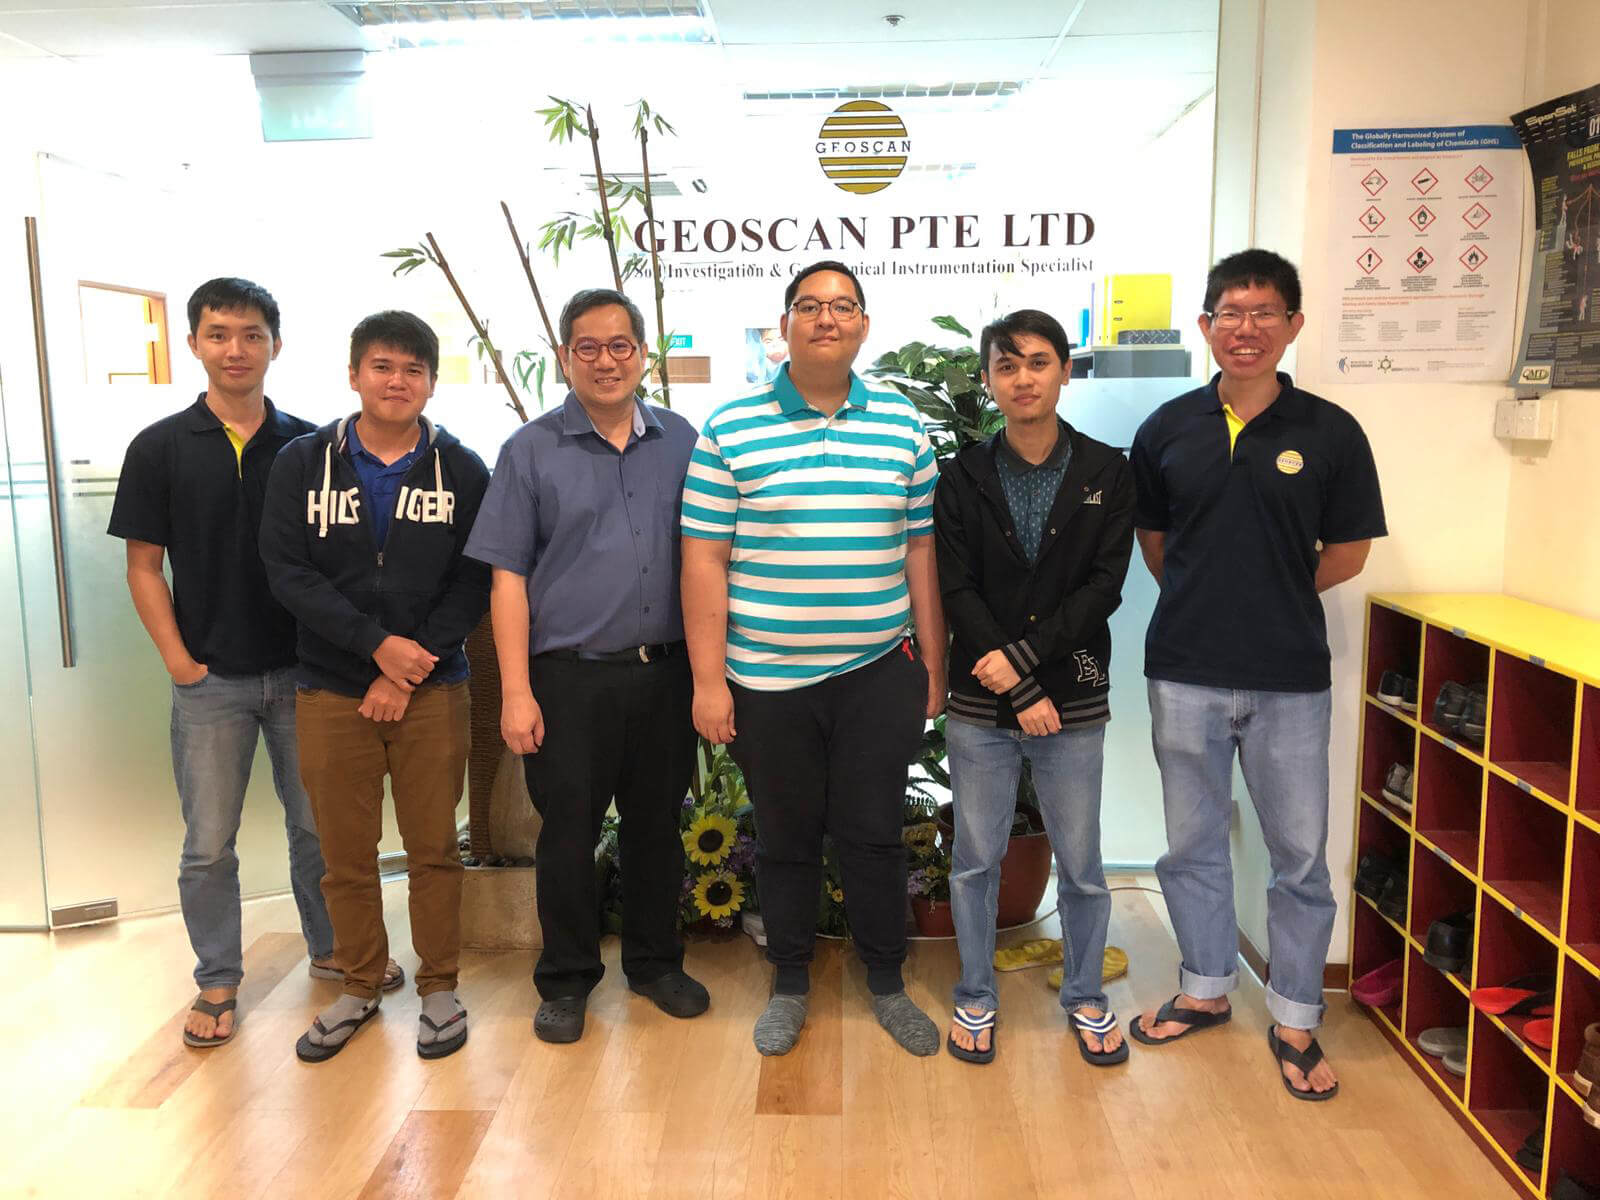 Group photo with SIT-DigiPen (Singapore) student interns Wazirullah Bin Rumzi and Zachary Ko with four Geoscan employees